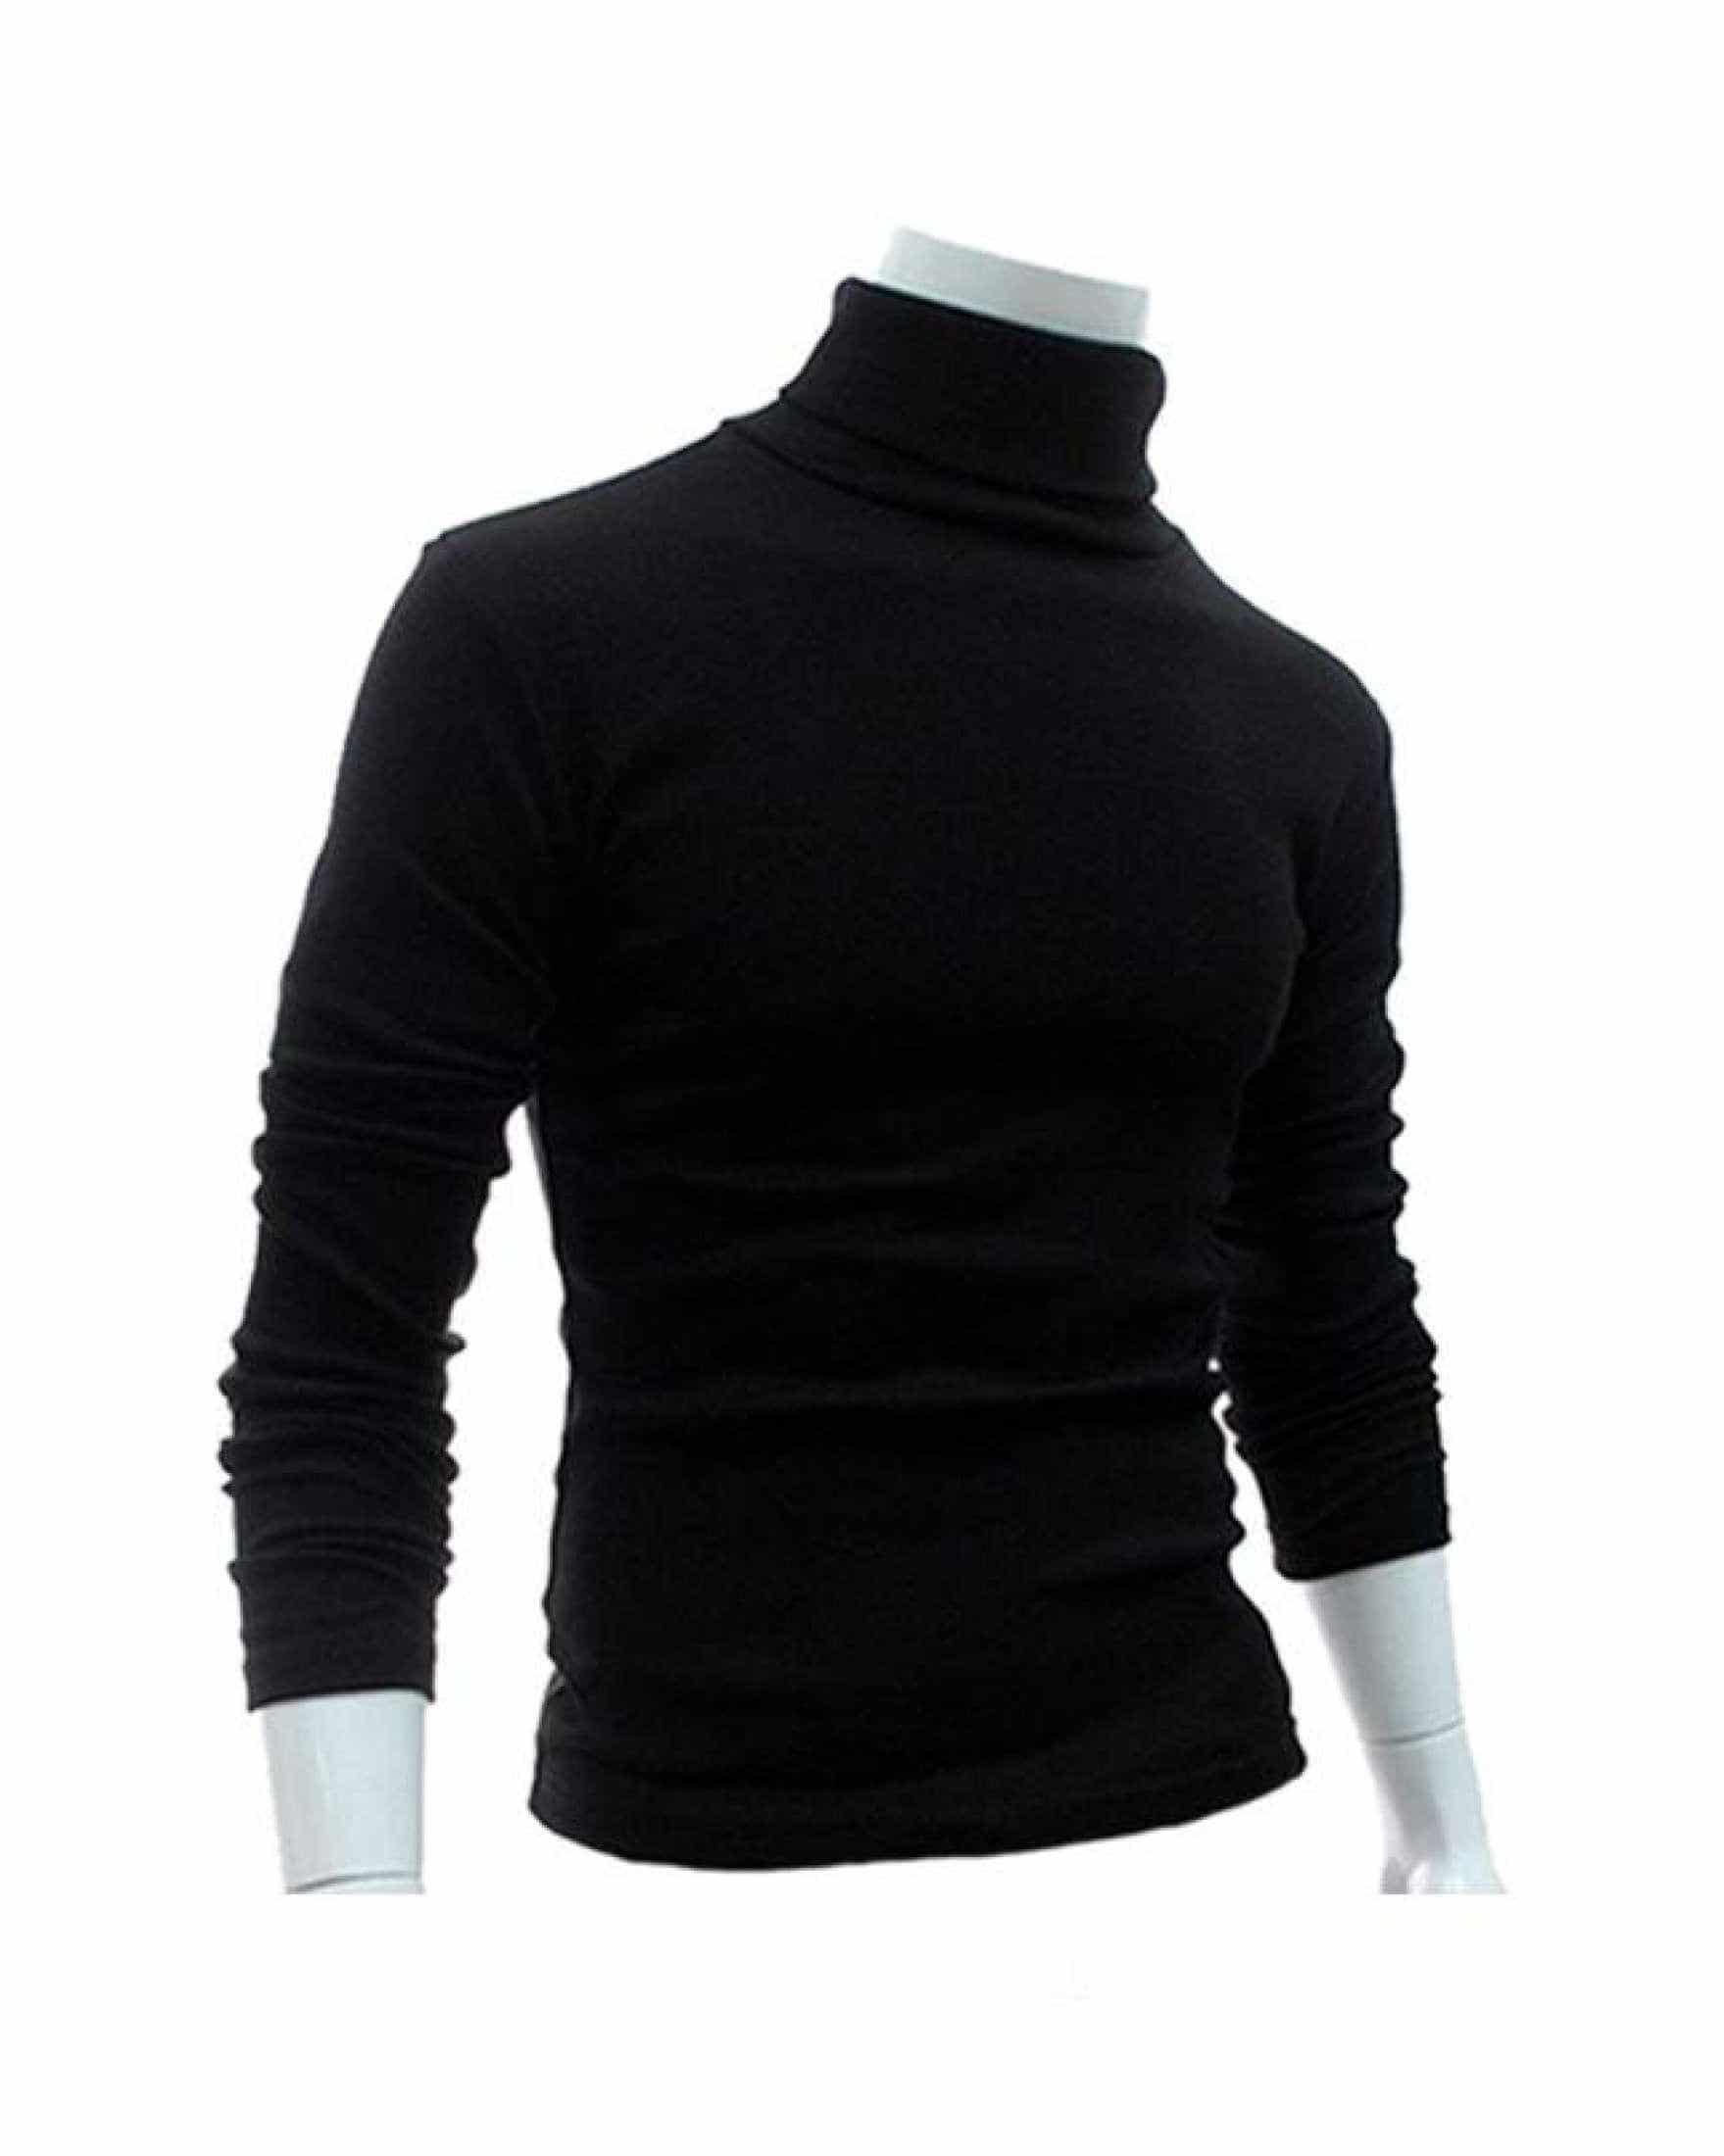 High Neck Full Sleeves For Men Large Size | Online Home Shopping in ...